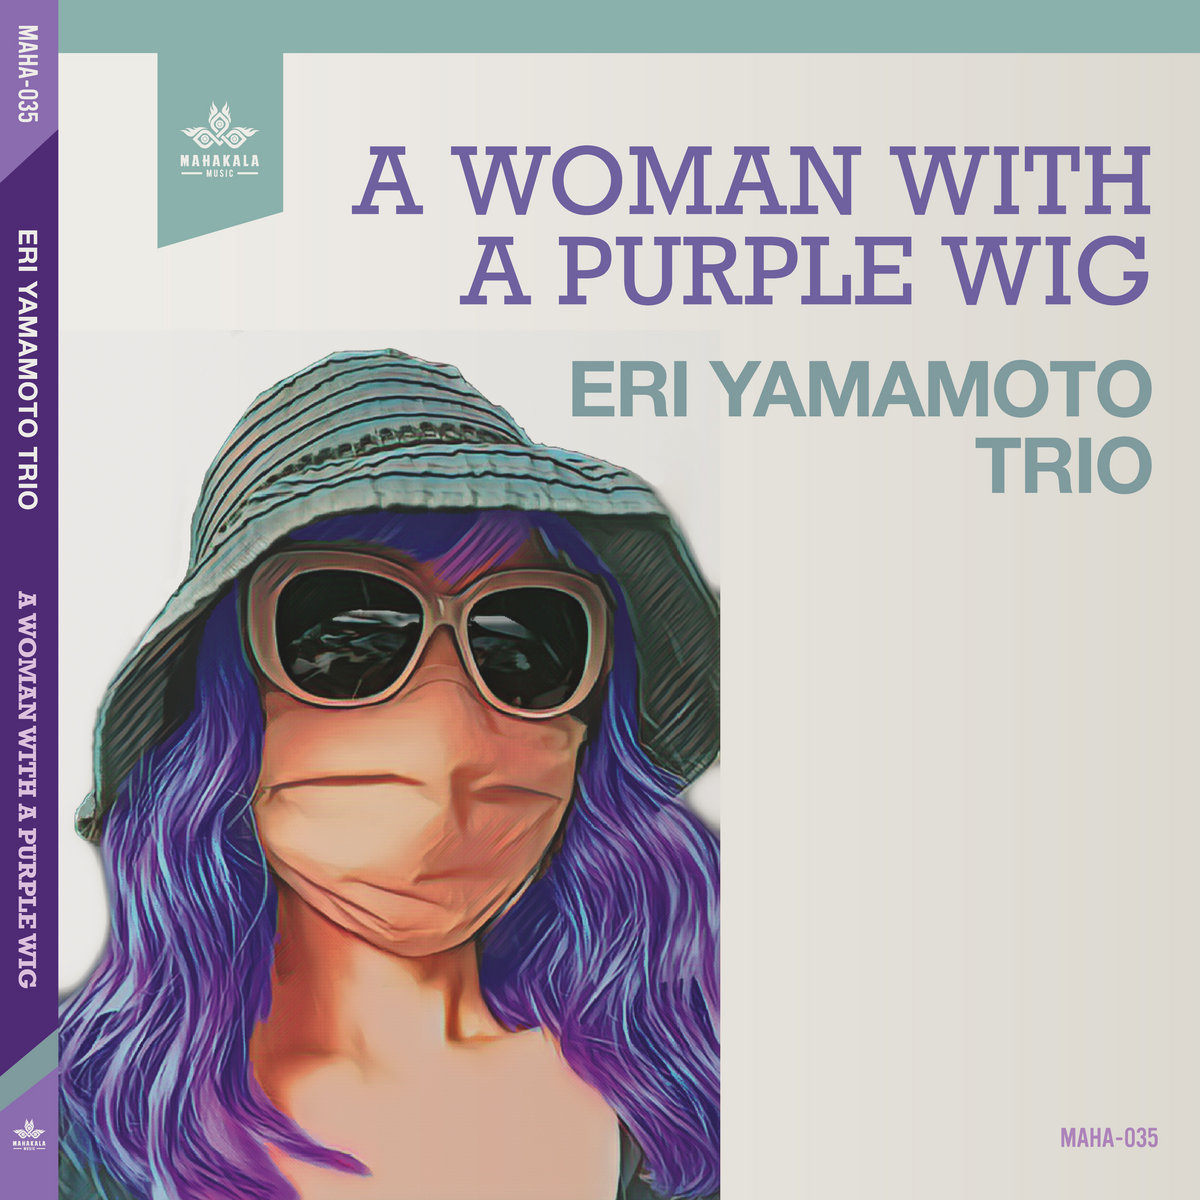 Eri Yamamoto Trio
A Woman With A Purple Wig